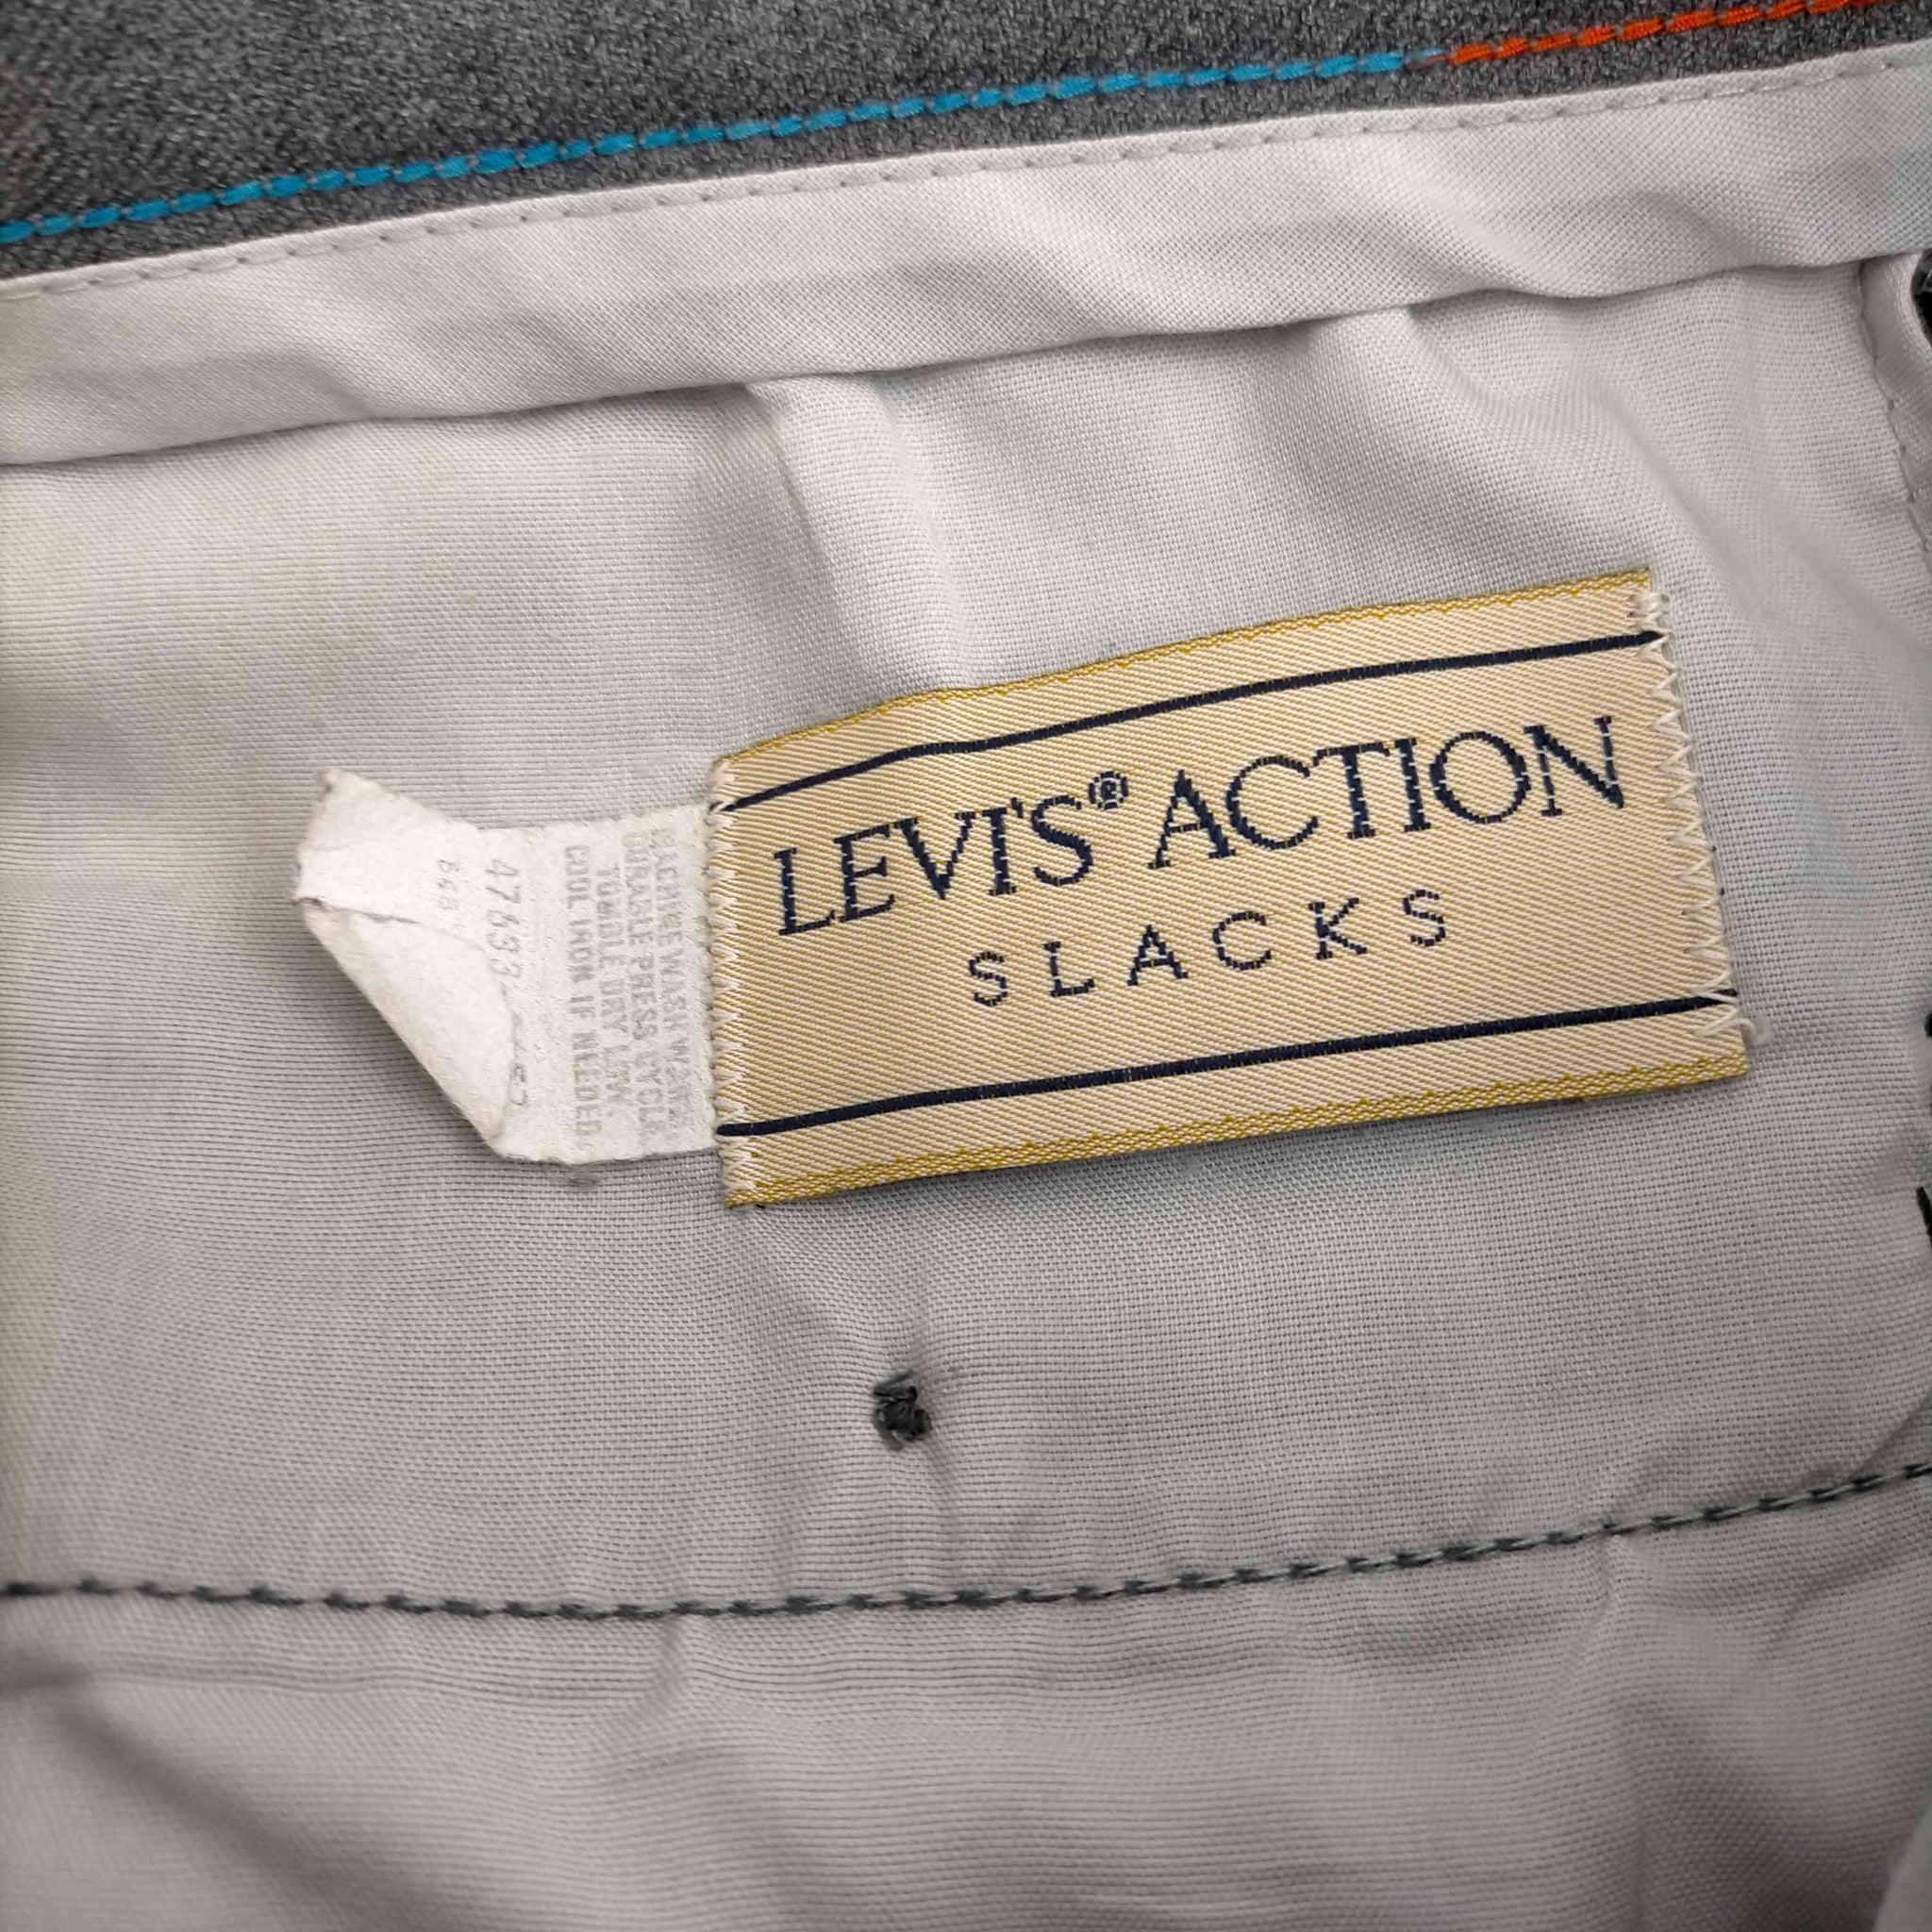 Levis(リーバイス)80s-90s ACTION SLACKS アクションスラックス